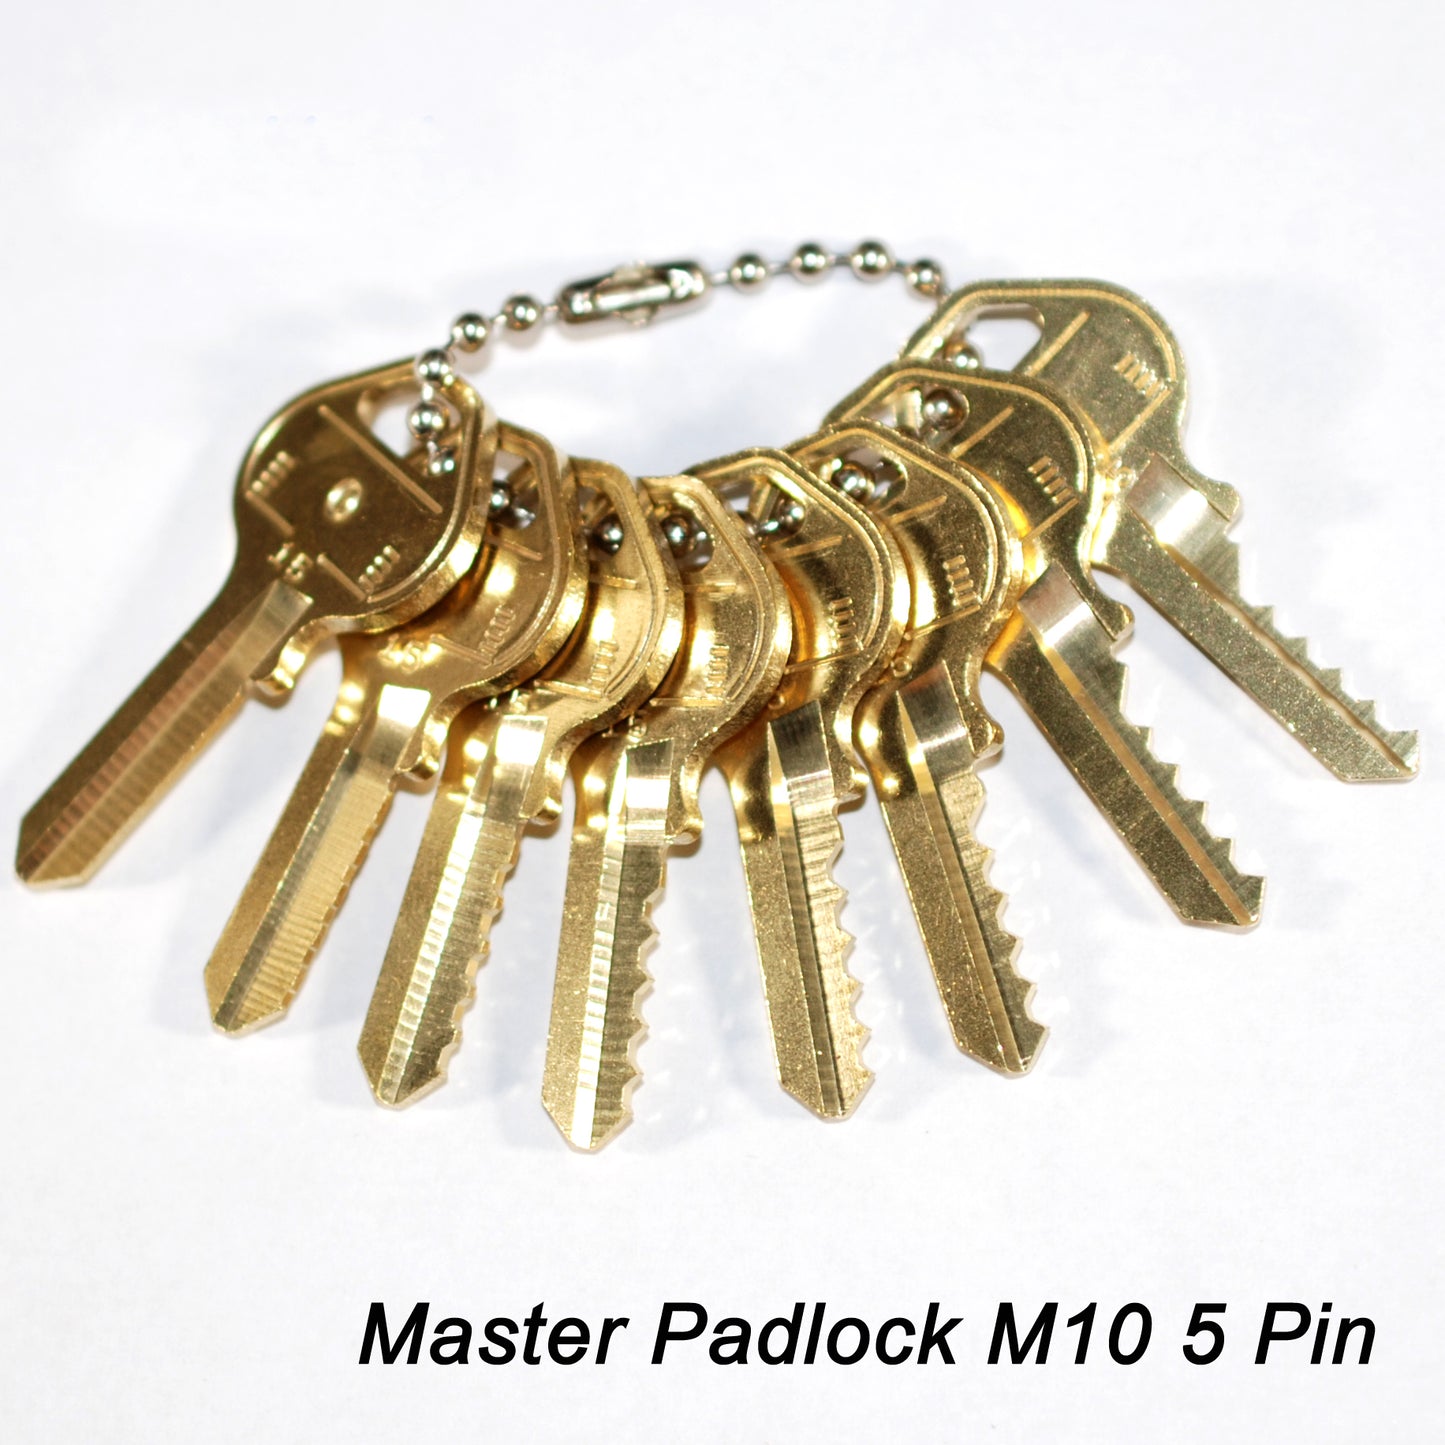 Master Padlock M10, K15 Space and Depth Keys ~ DSD#050, C35